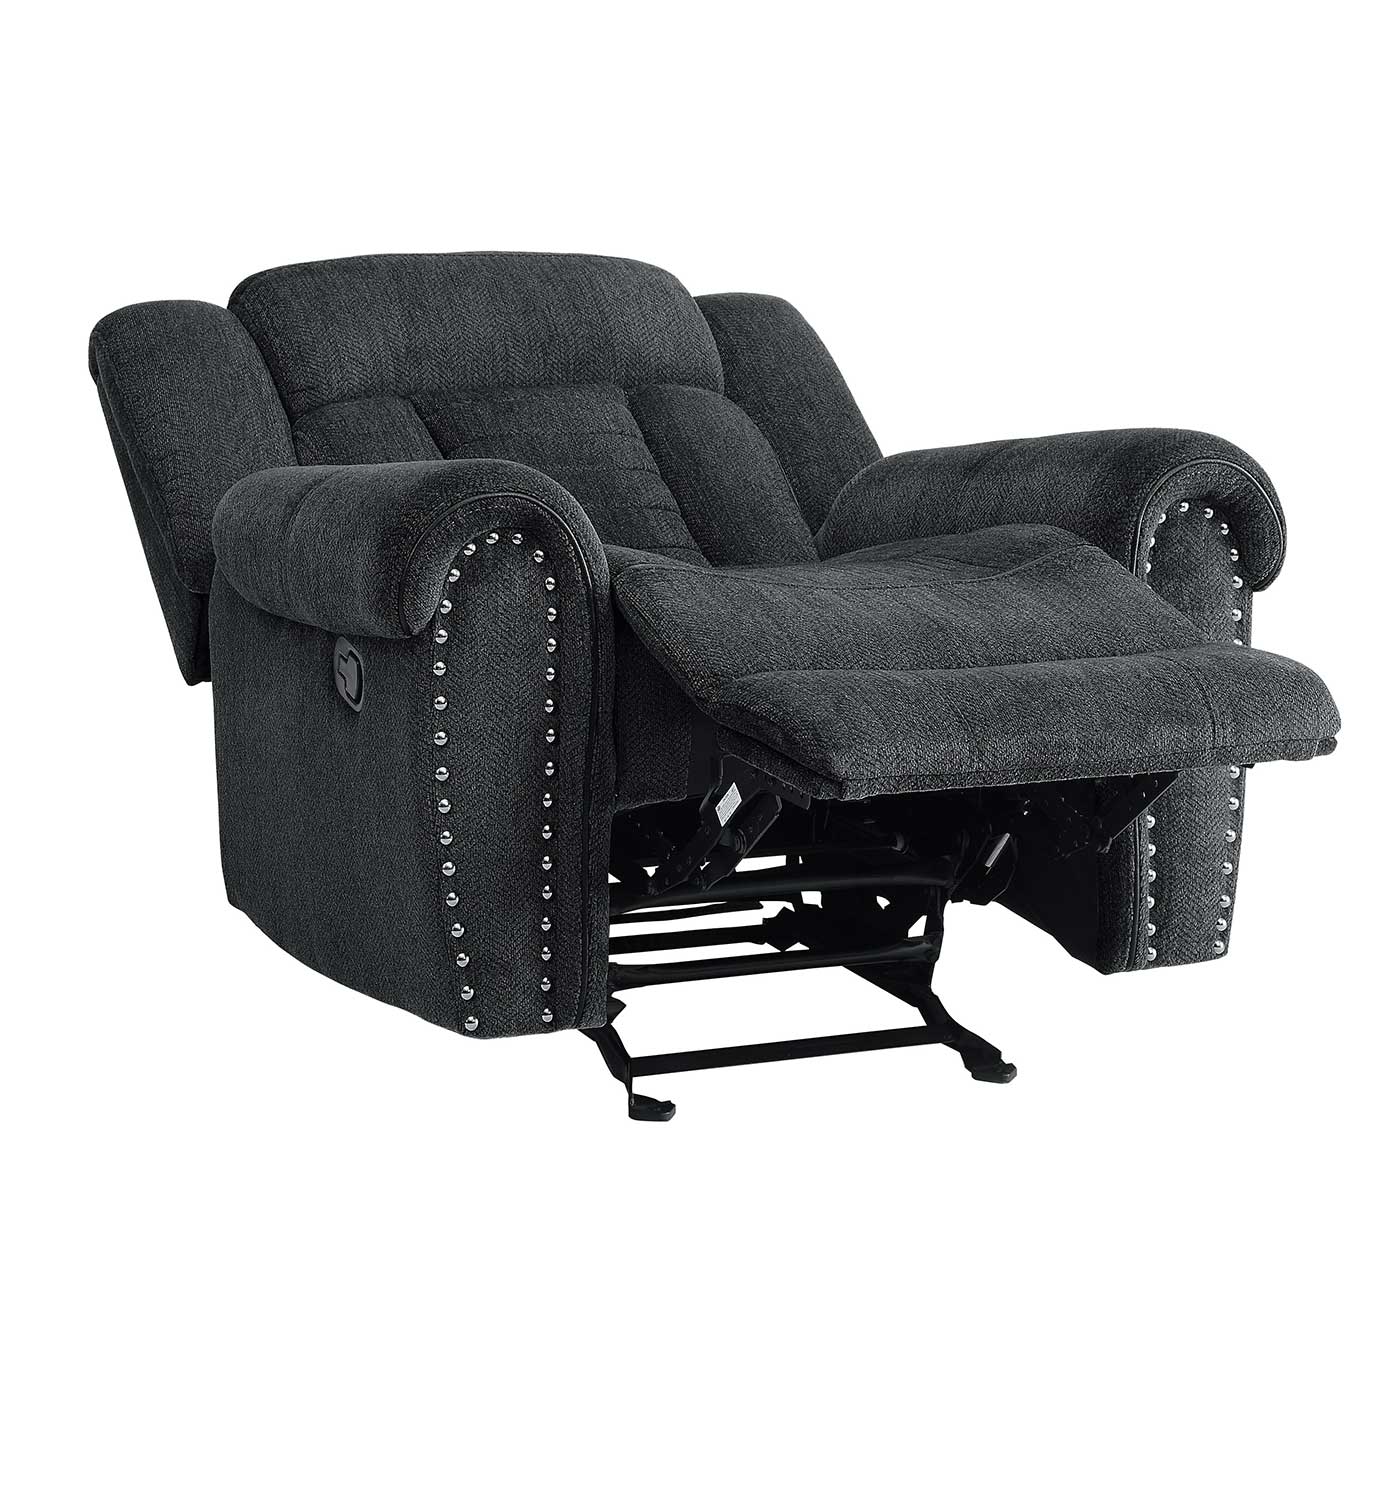 Homelegance Nutmeg Glider Reclining Chair - Charcoal Gray